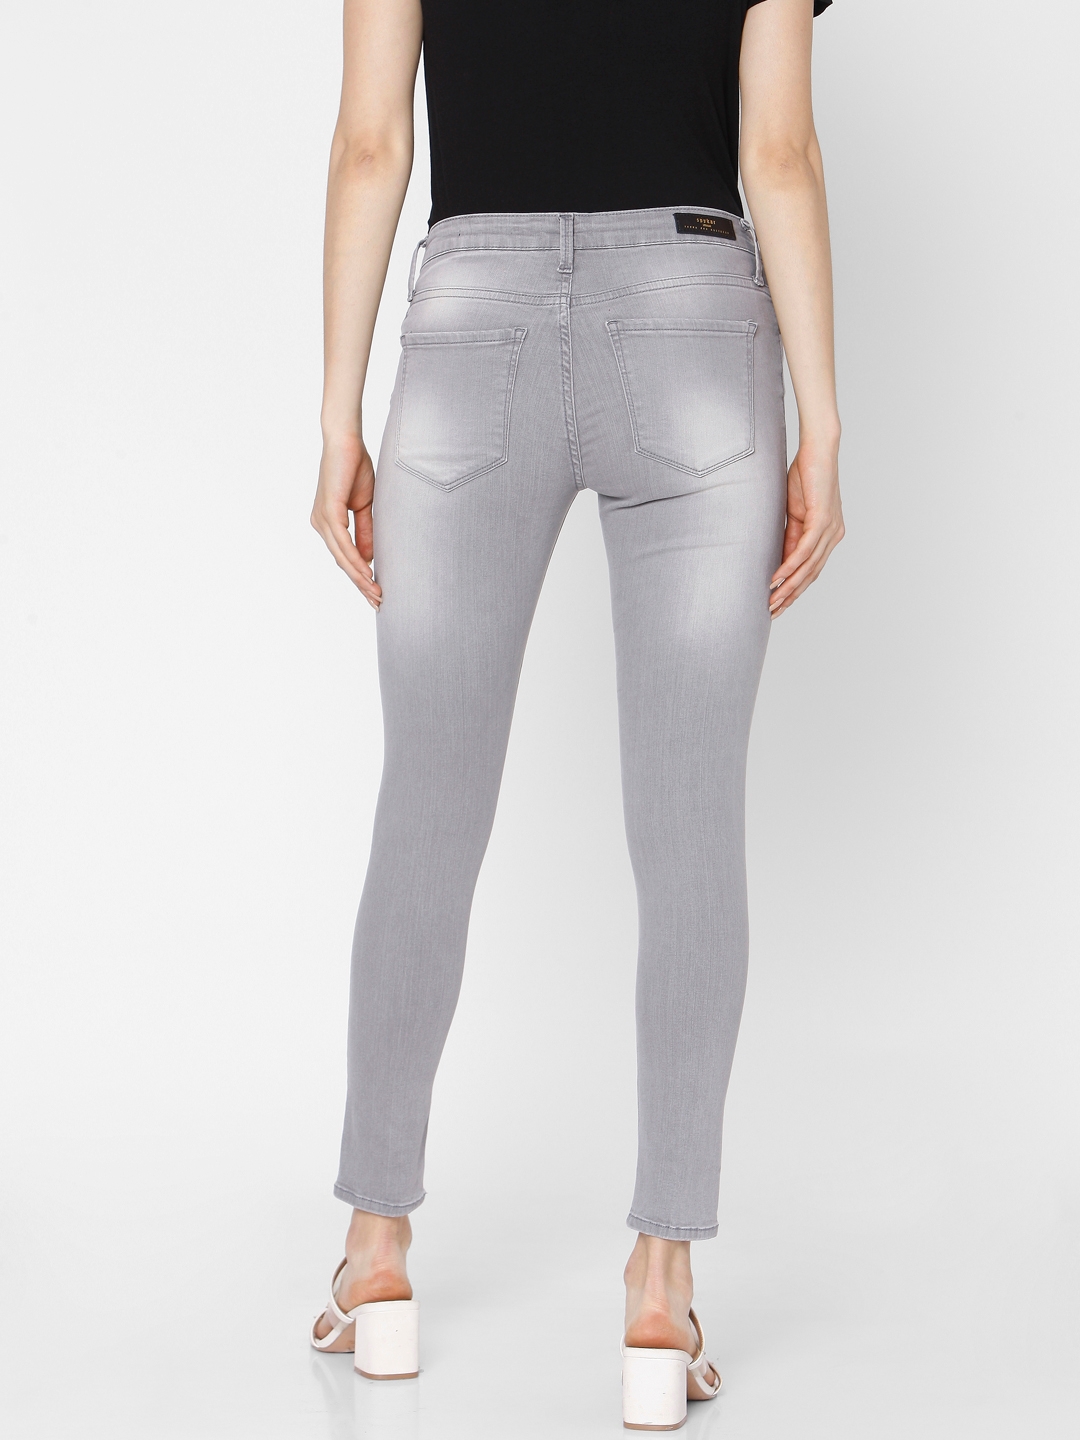 Spykar | Women's Grey Cotton Solid Skinny Jeans 4